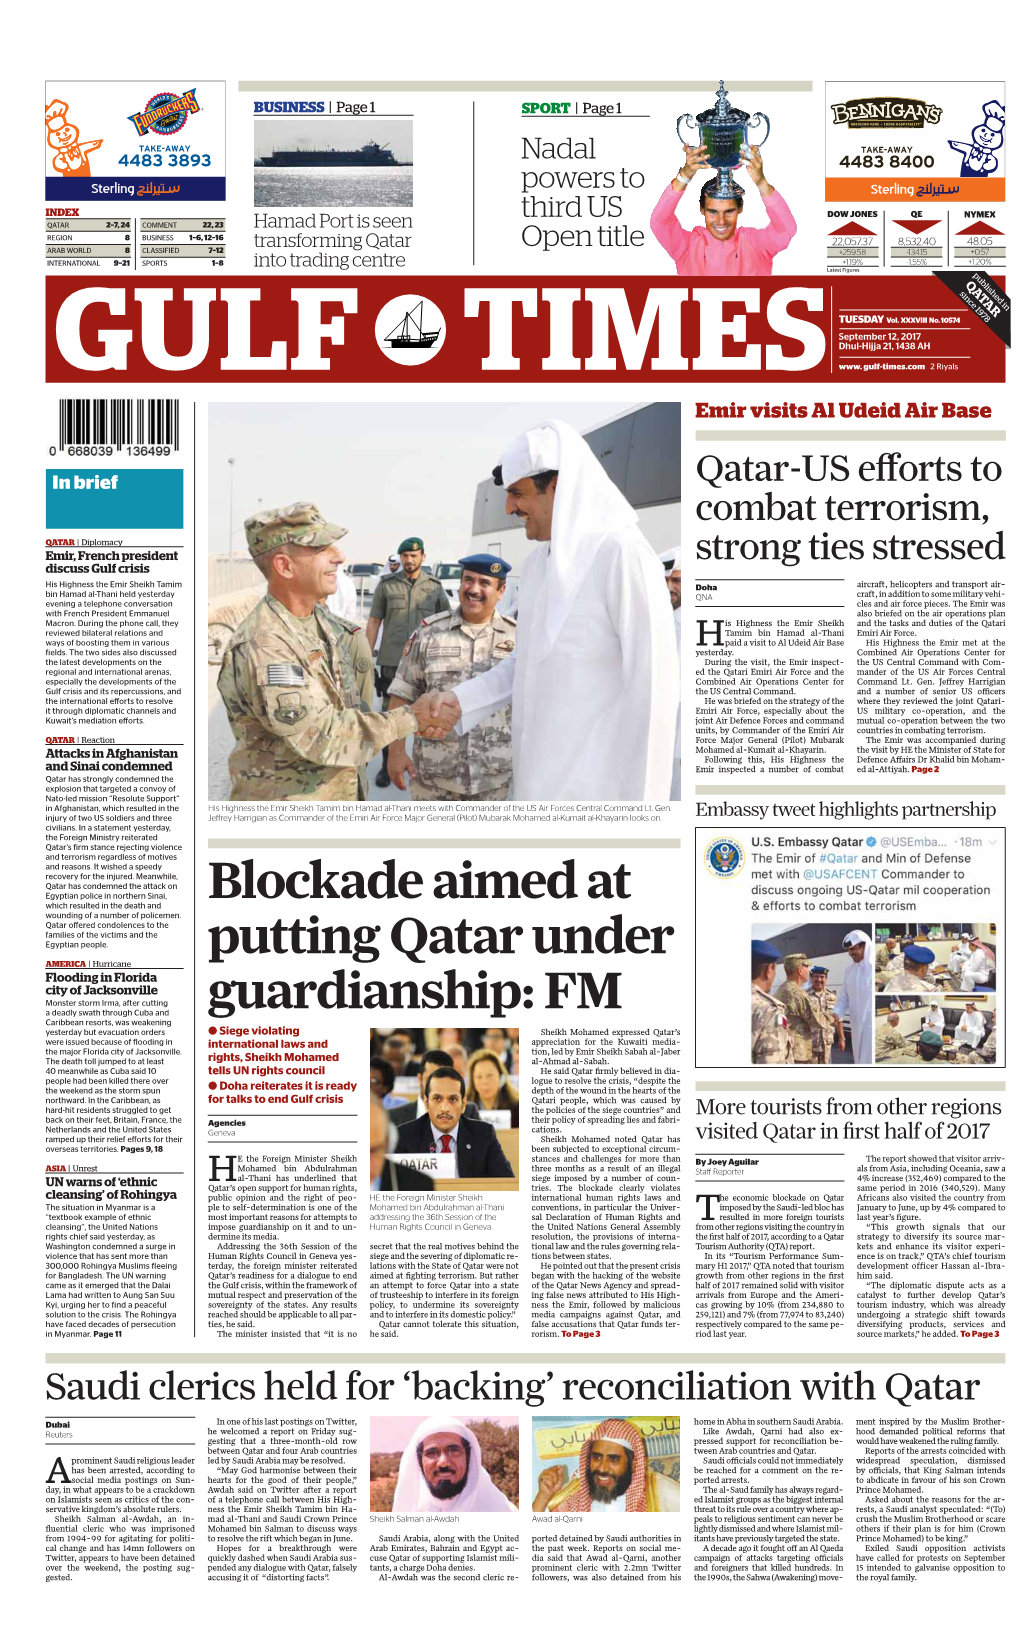 Blockade Aimed at Putting Qatar Under Guardianship